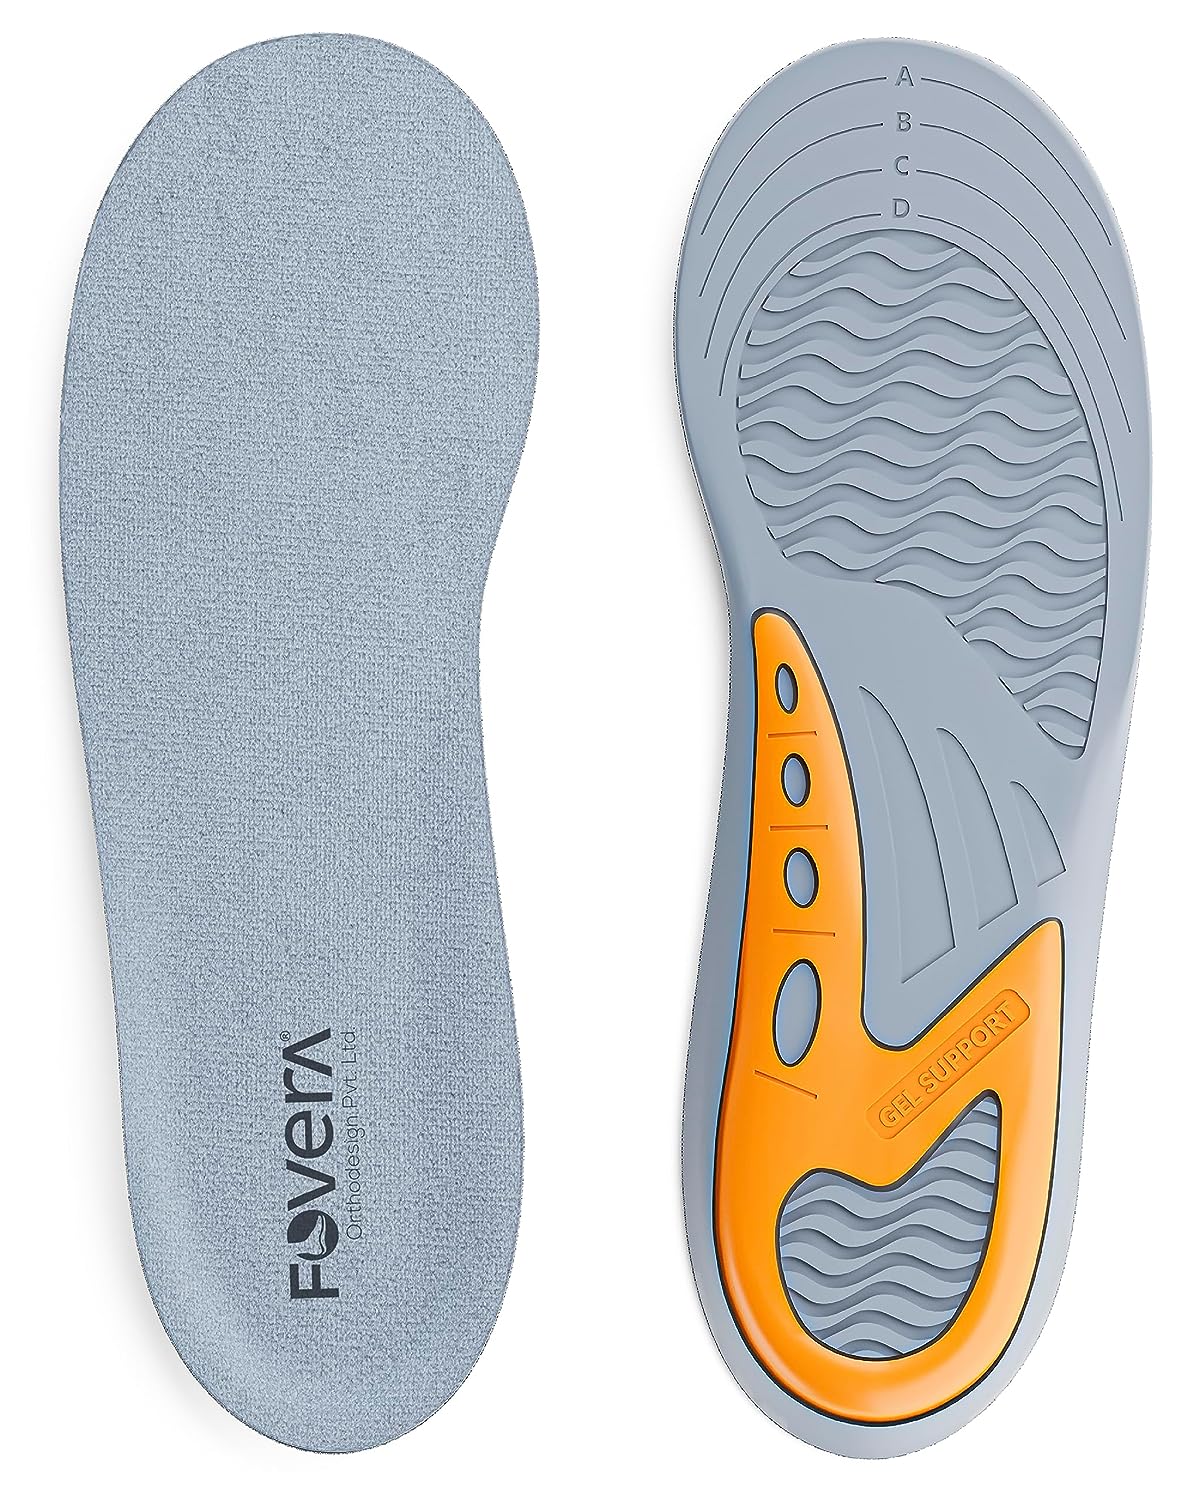 Premium Heel Pads For Shoes Big Self Adhesive Heel Inserts Heel Grips 1  Pairs | eBay